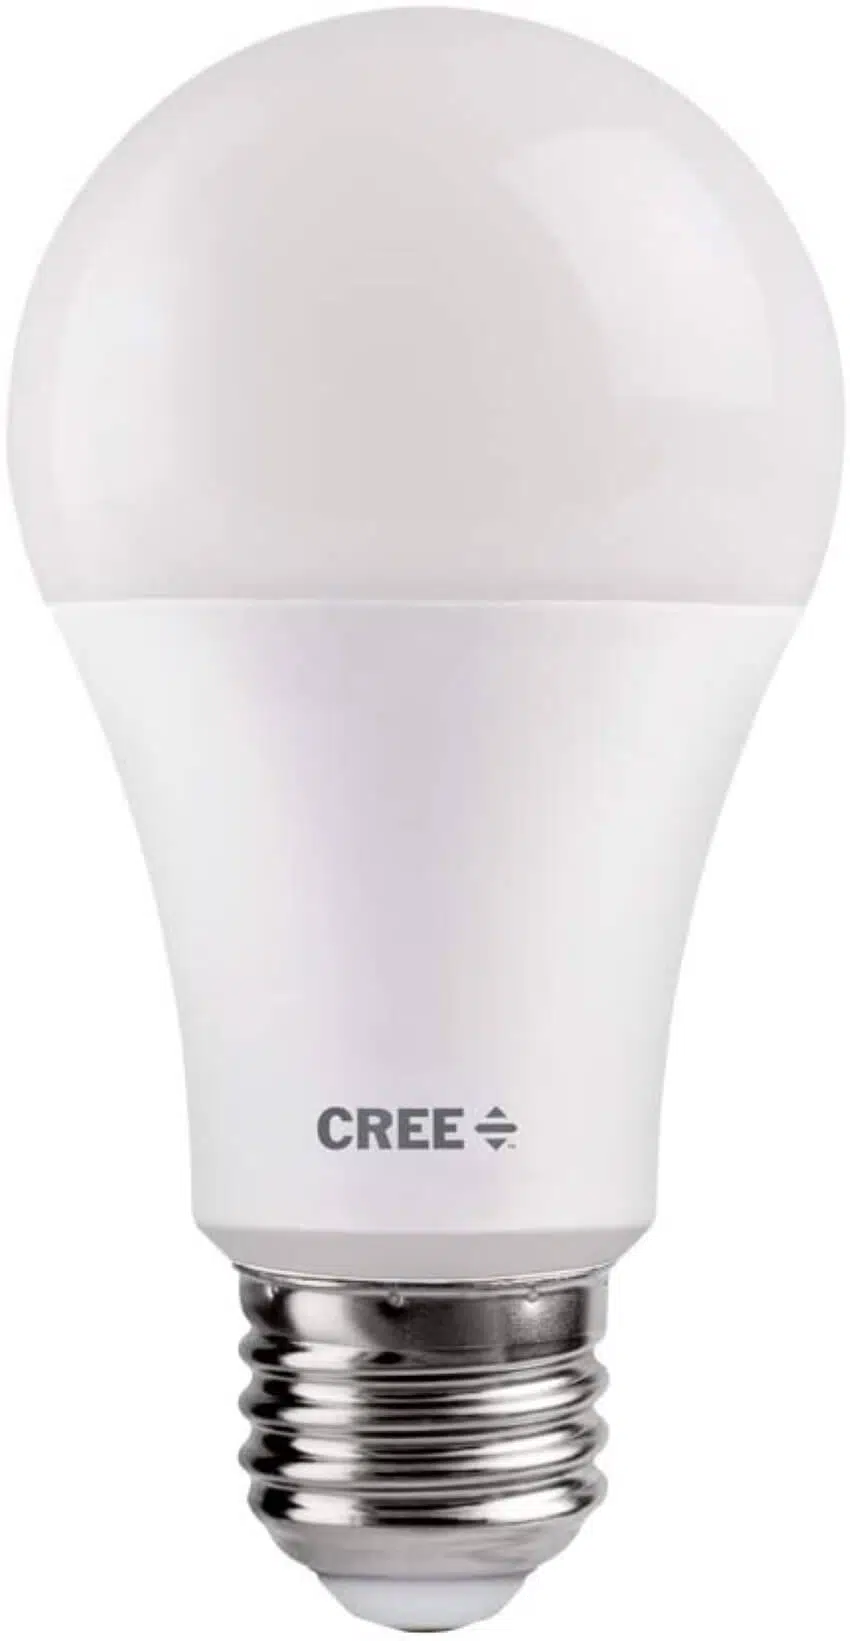 Cree Lighting TA 19 Dimmable Light Bulbs